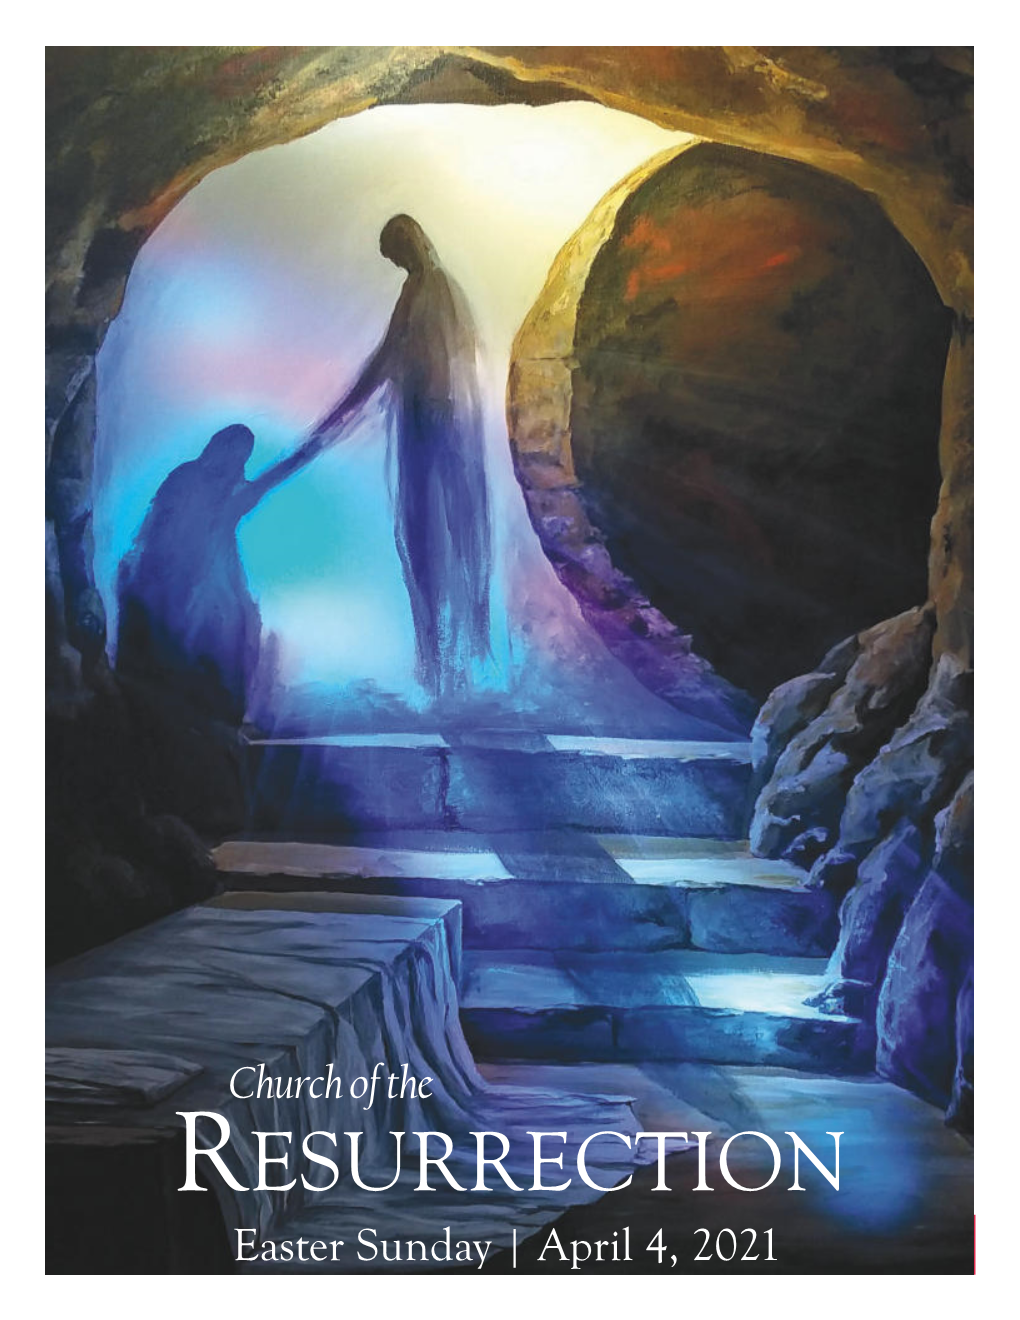 Resurrection